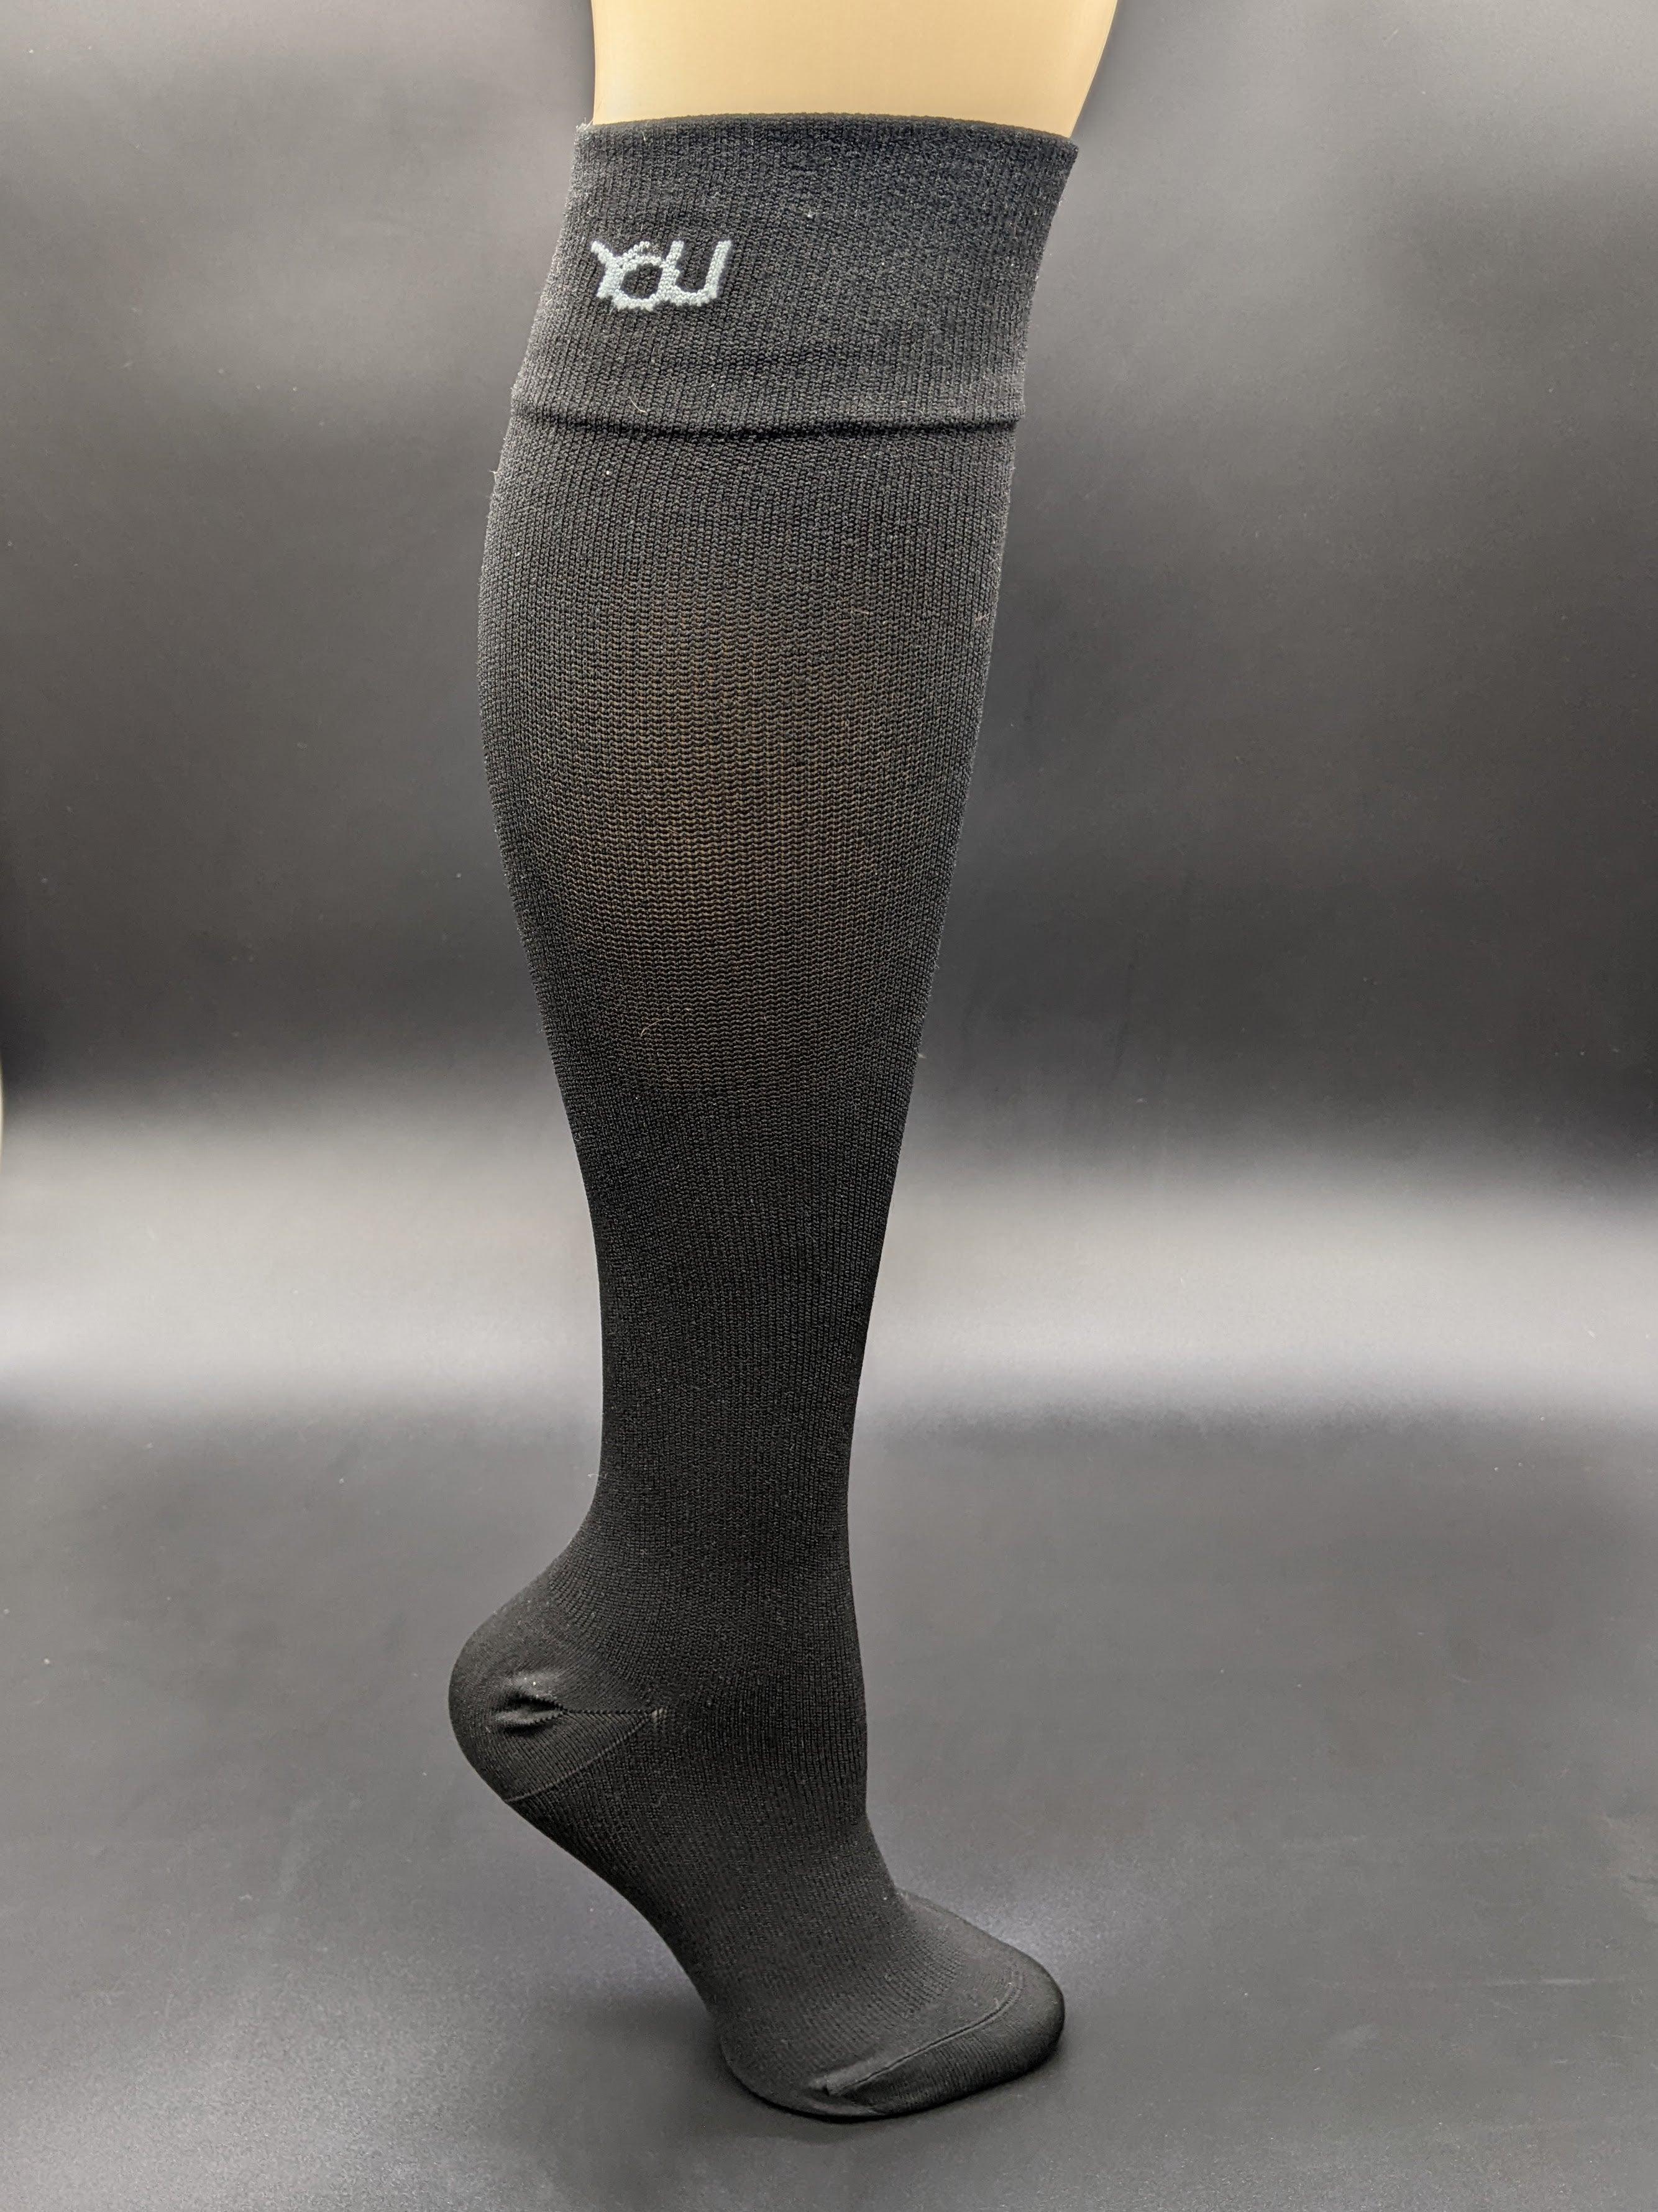 High Compression Socks 30-40 mmHg - Knee High - 763K99-SB High Compression Socks 30-40 mmHg - Knee High - undefined by Supply Physical Therapy 30-40 mmHg, Compression socks